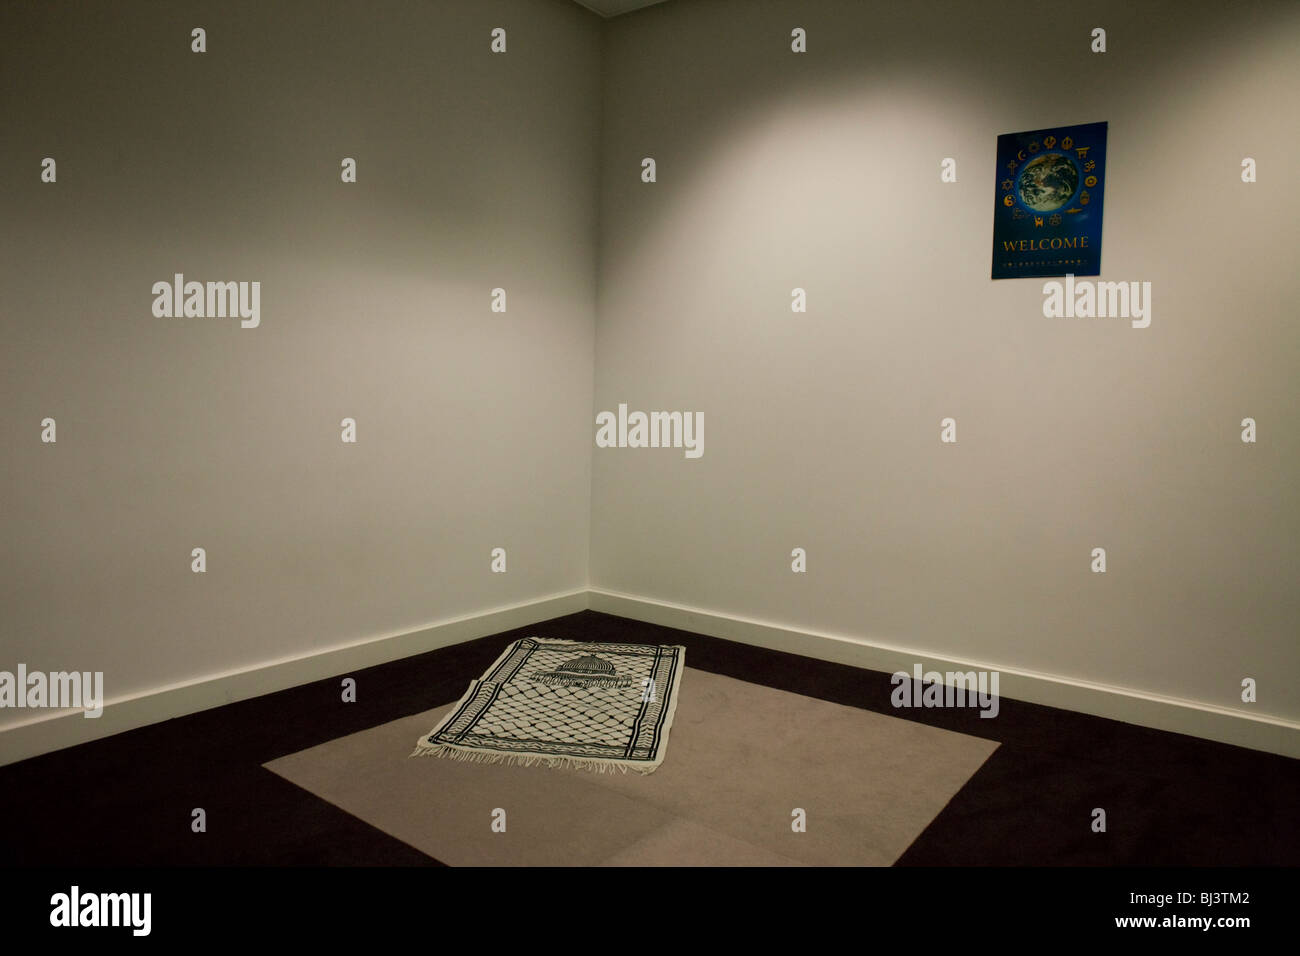 Islamic prayer mat in prayer room at Heathrow airport. Stock Photo